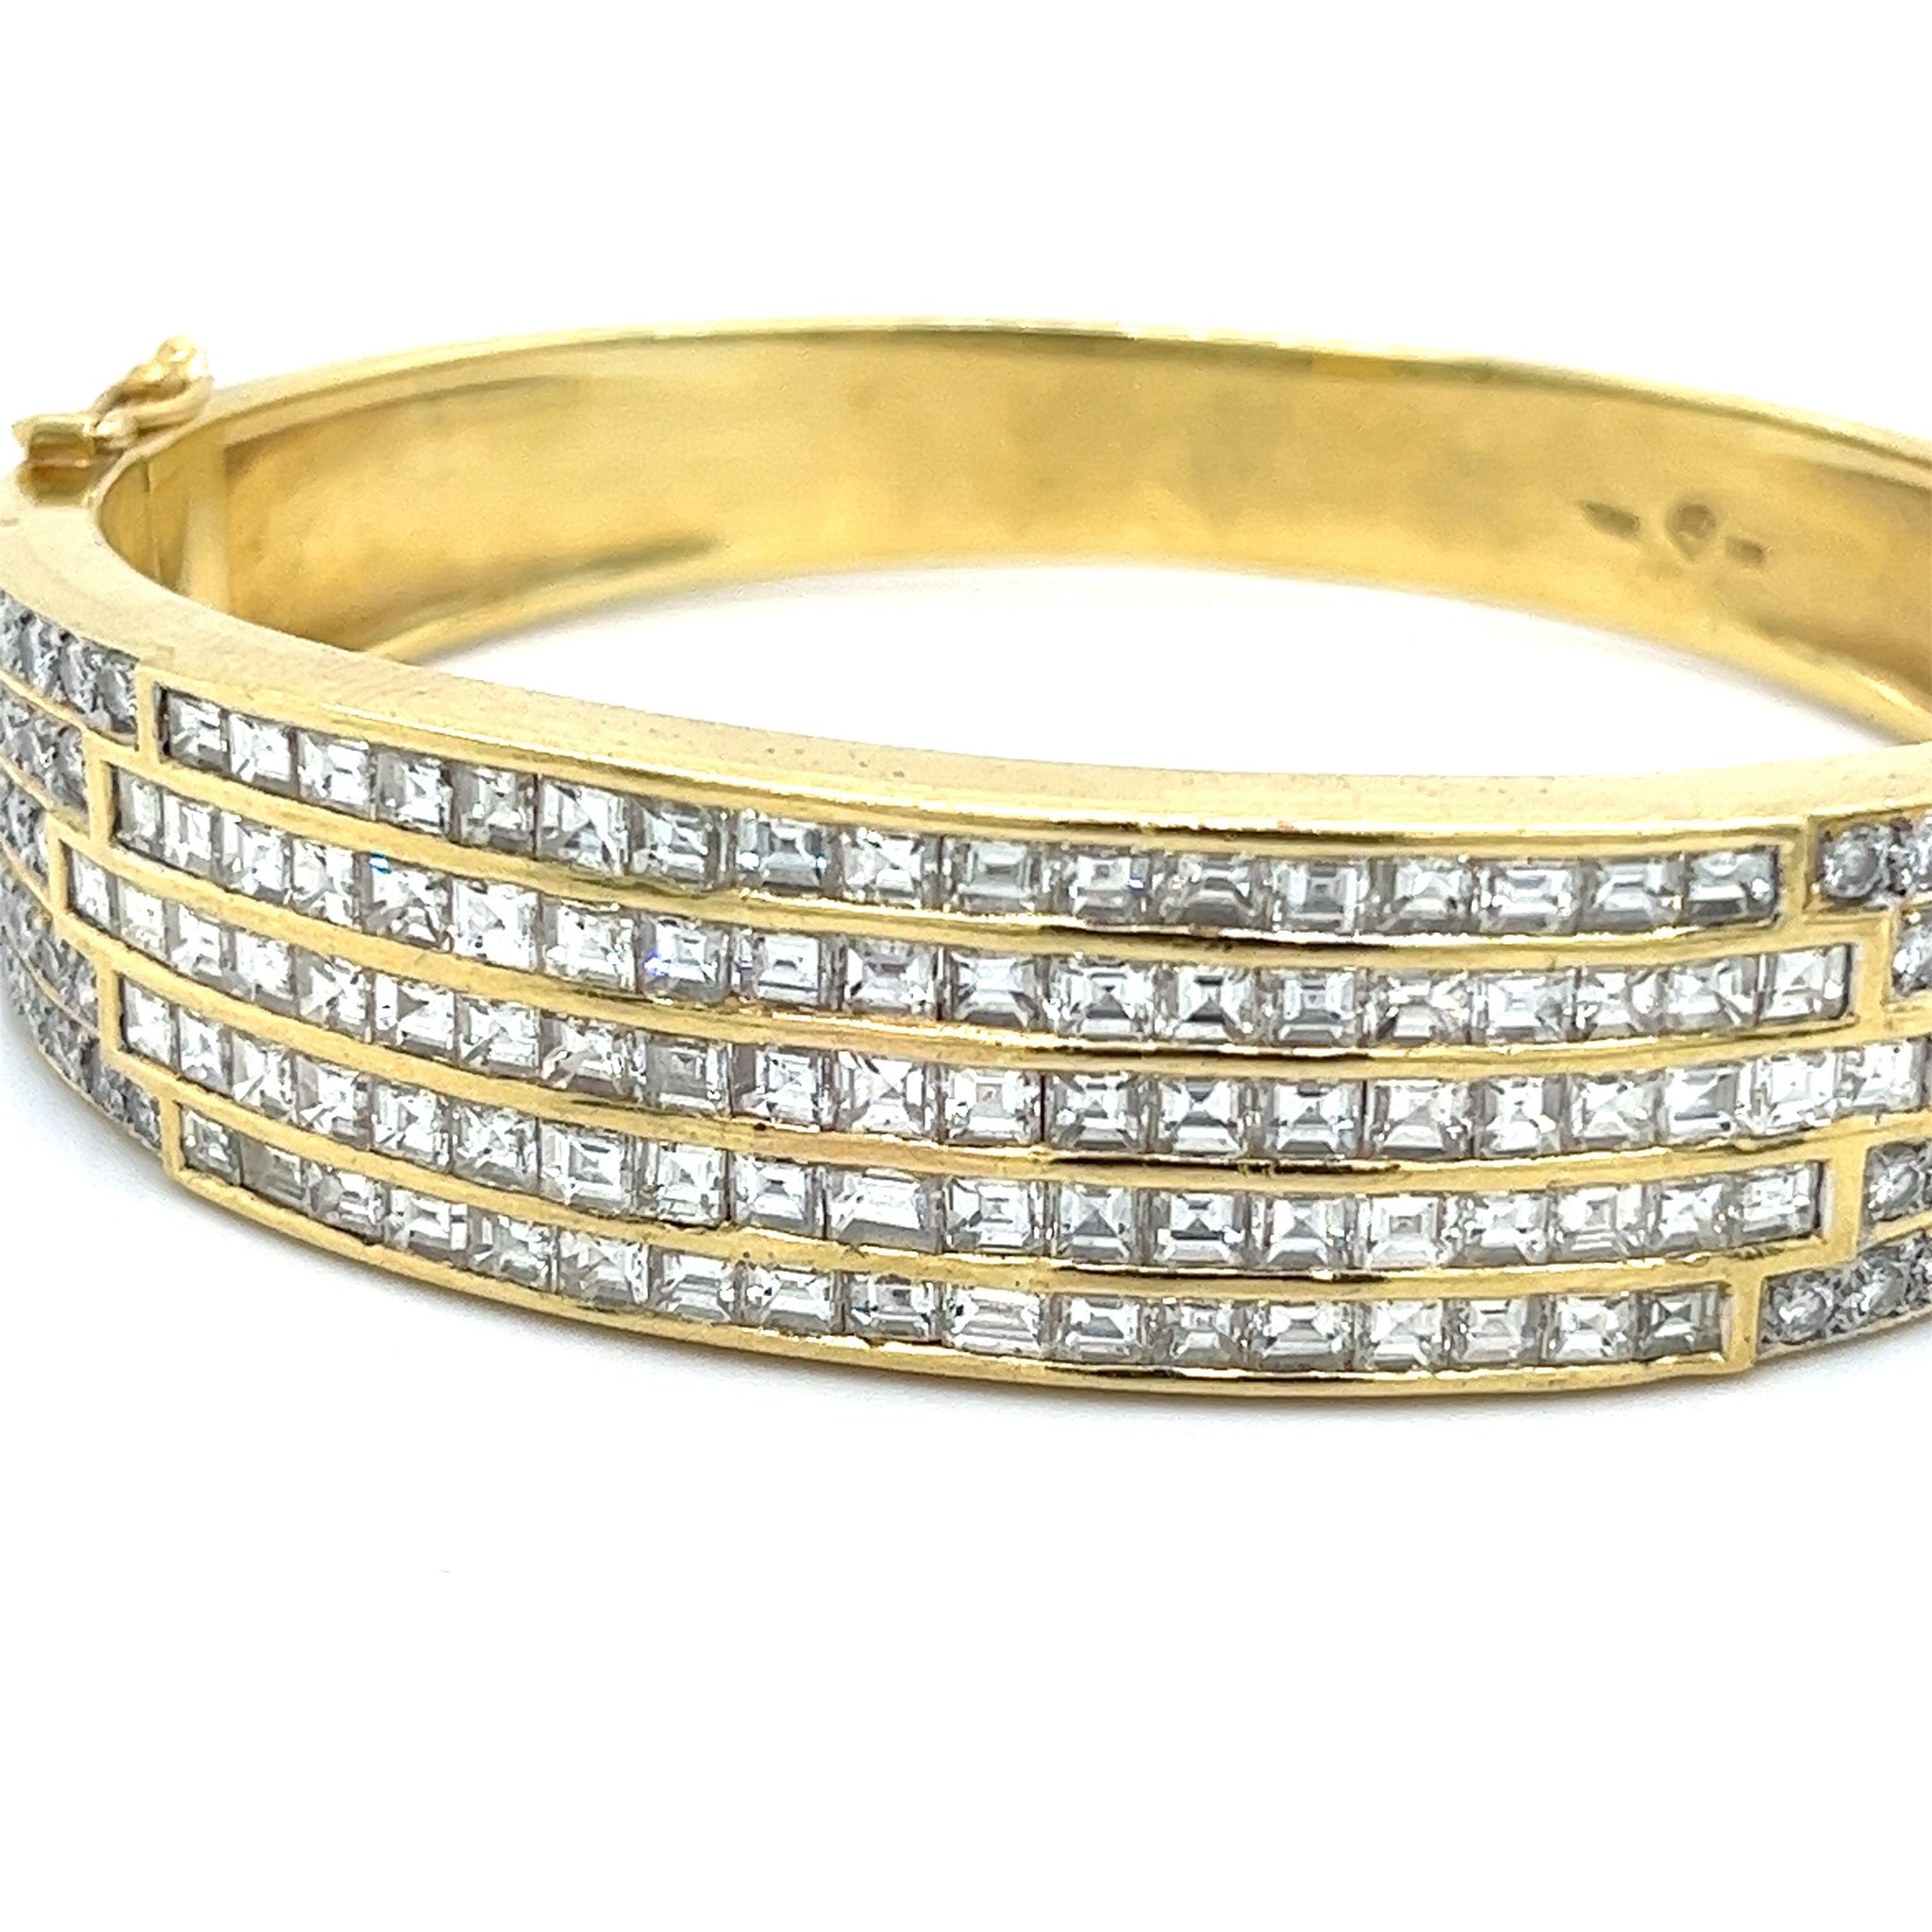 10 Carat TW Diamond Encrusted Multi Row Bangle Bracelet in 18K Yellow Gold-Bracelets-ASSAY